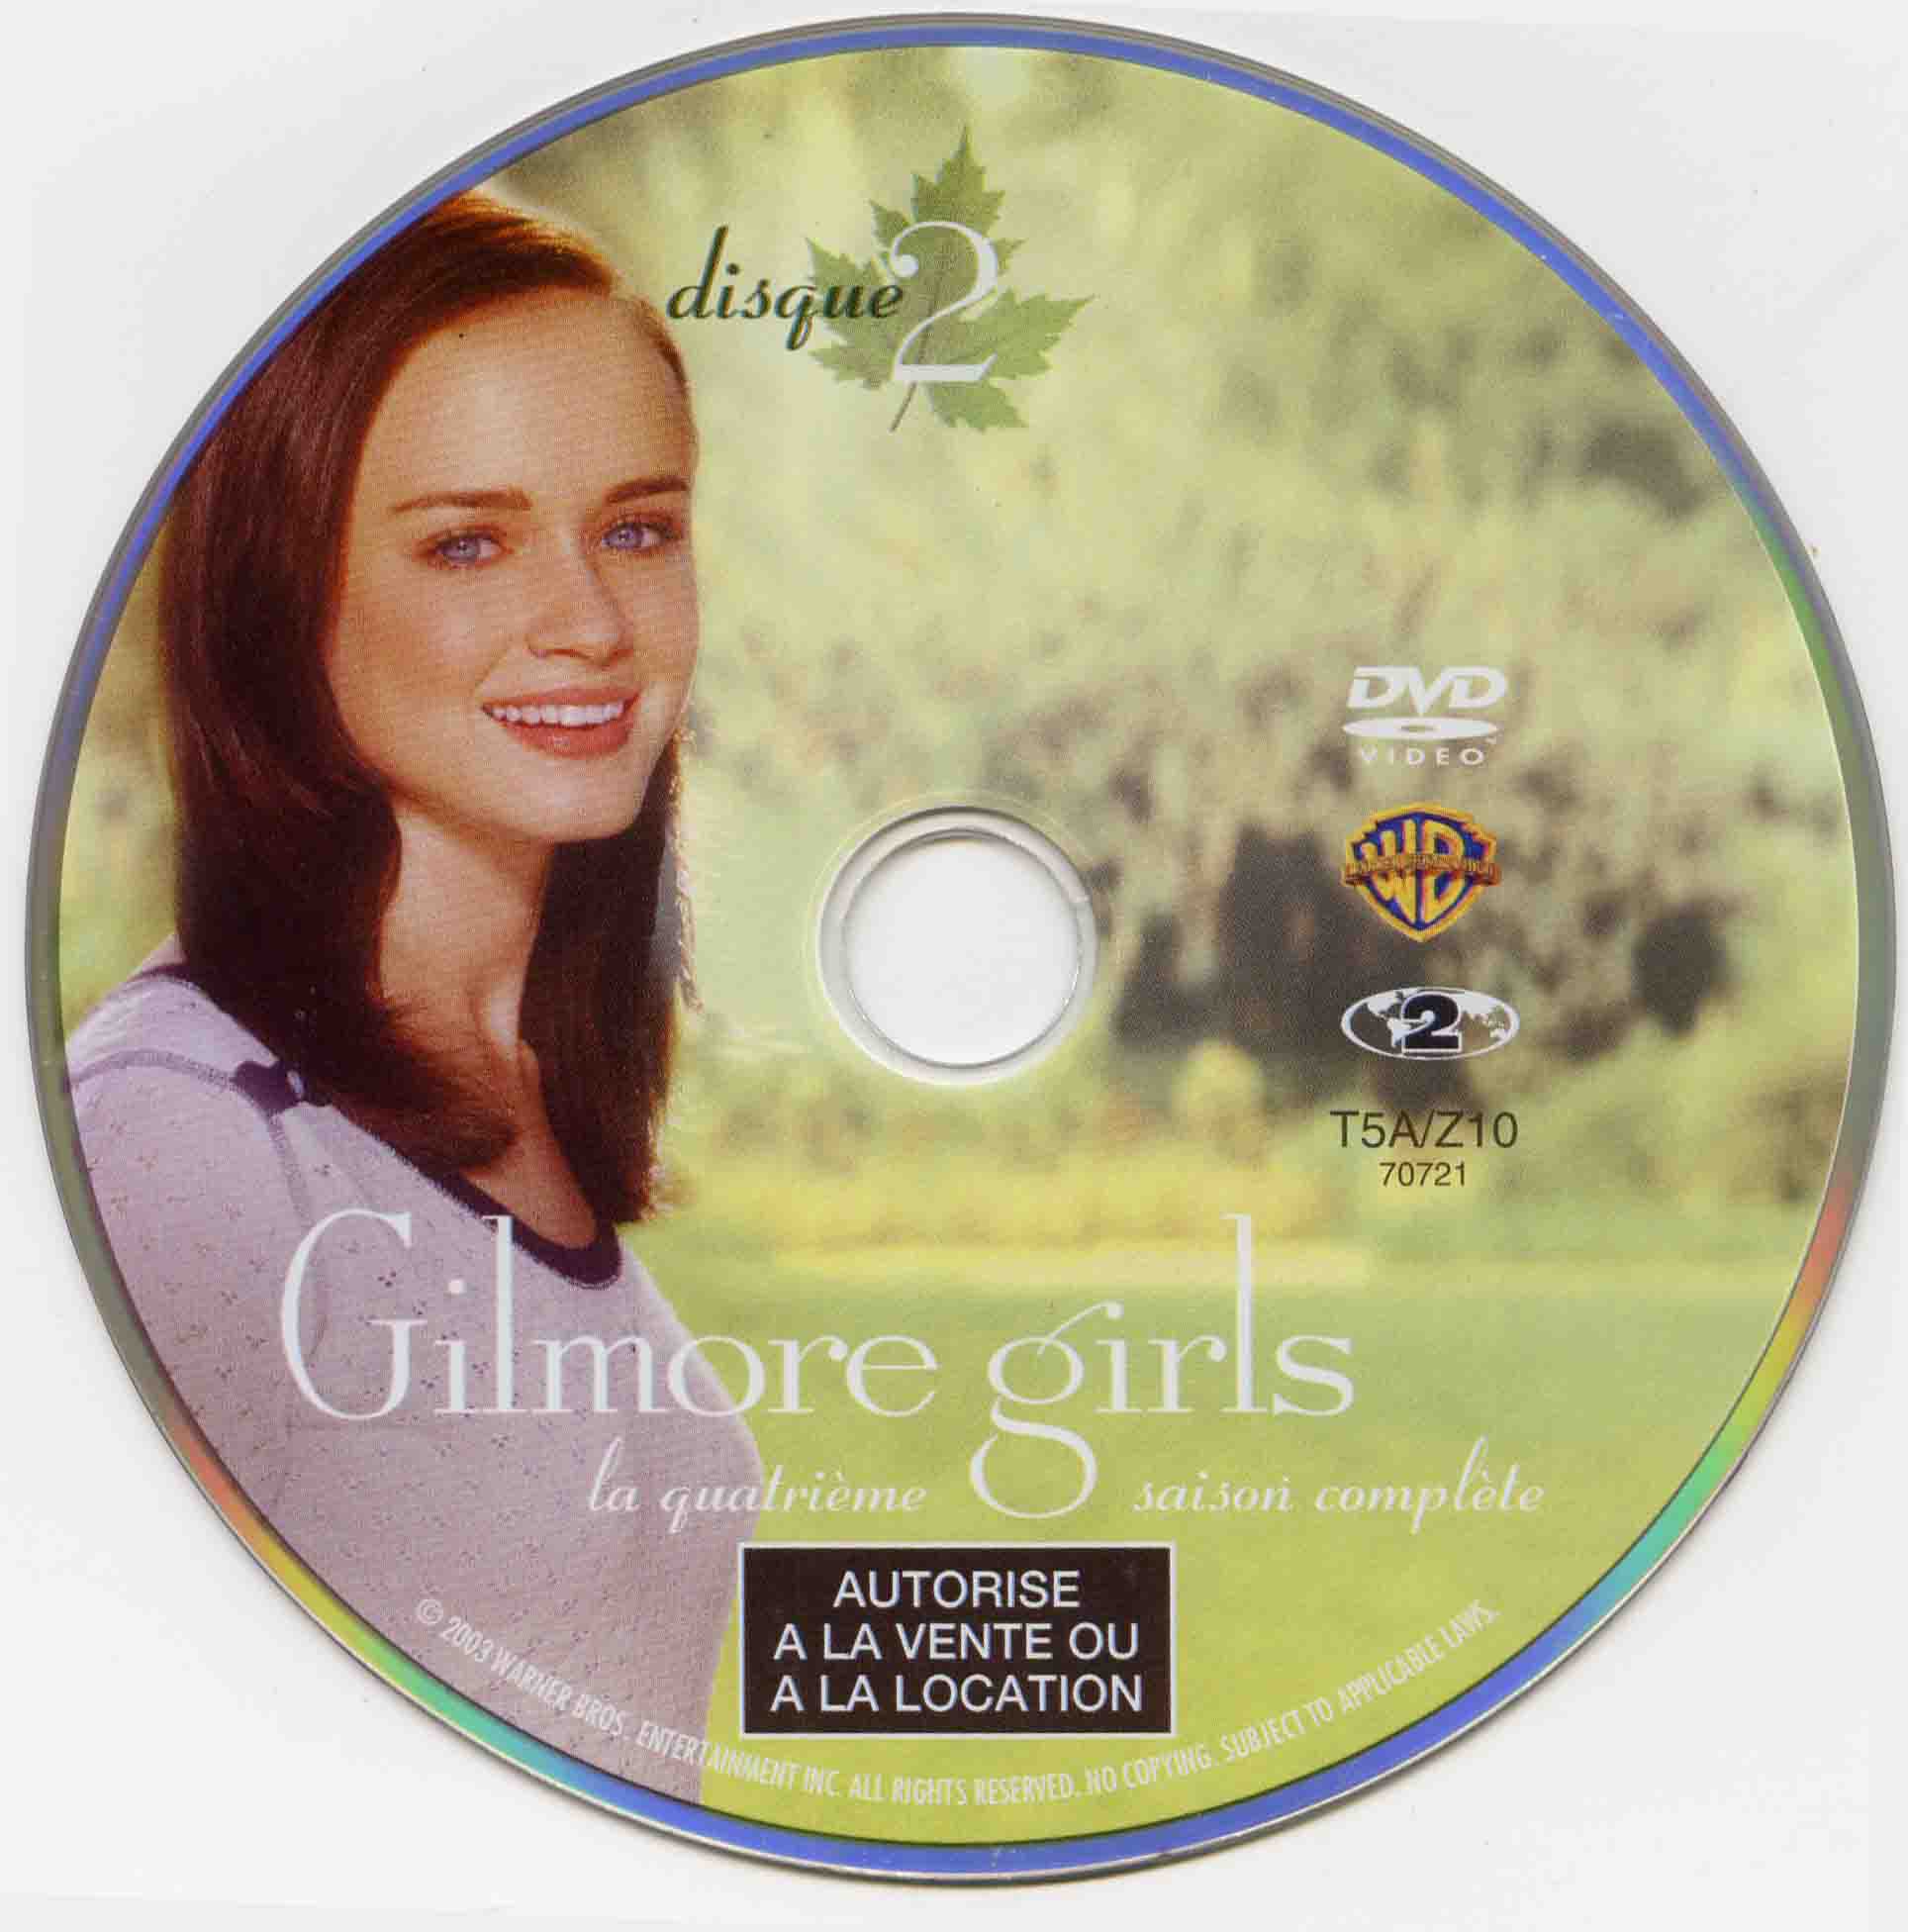 Gilmore girls saison 4 DISC 2